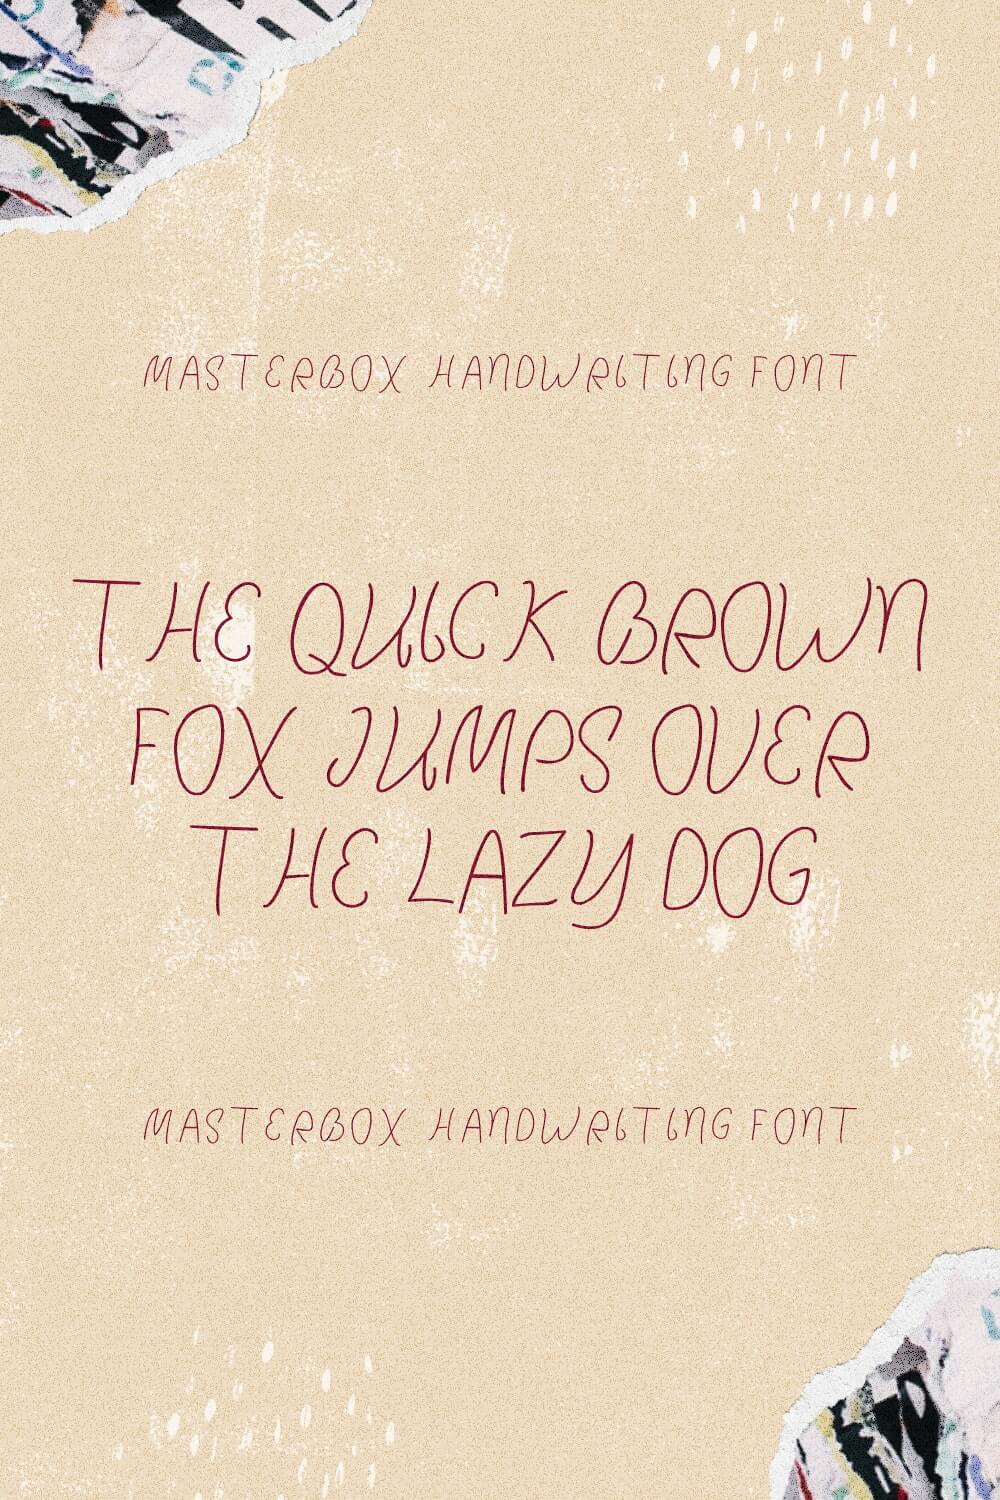 masterbox handwriting regular font pinterest.